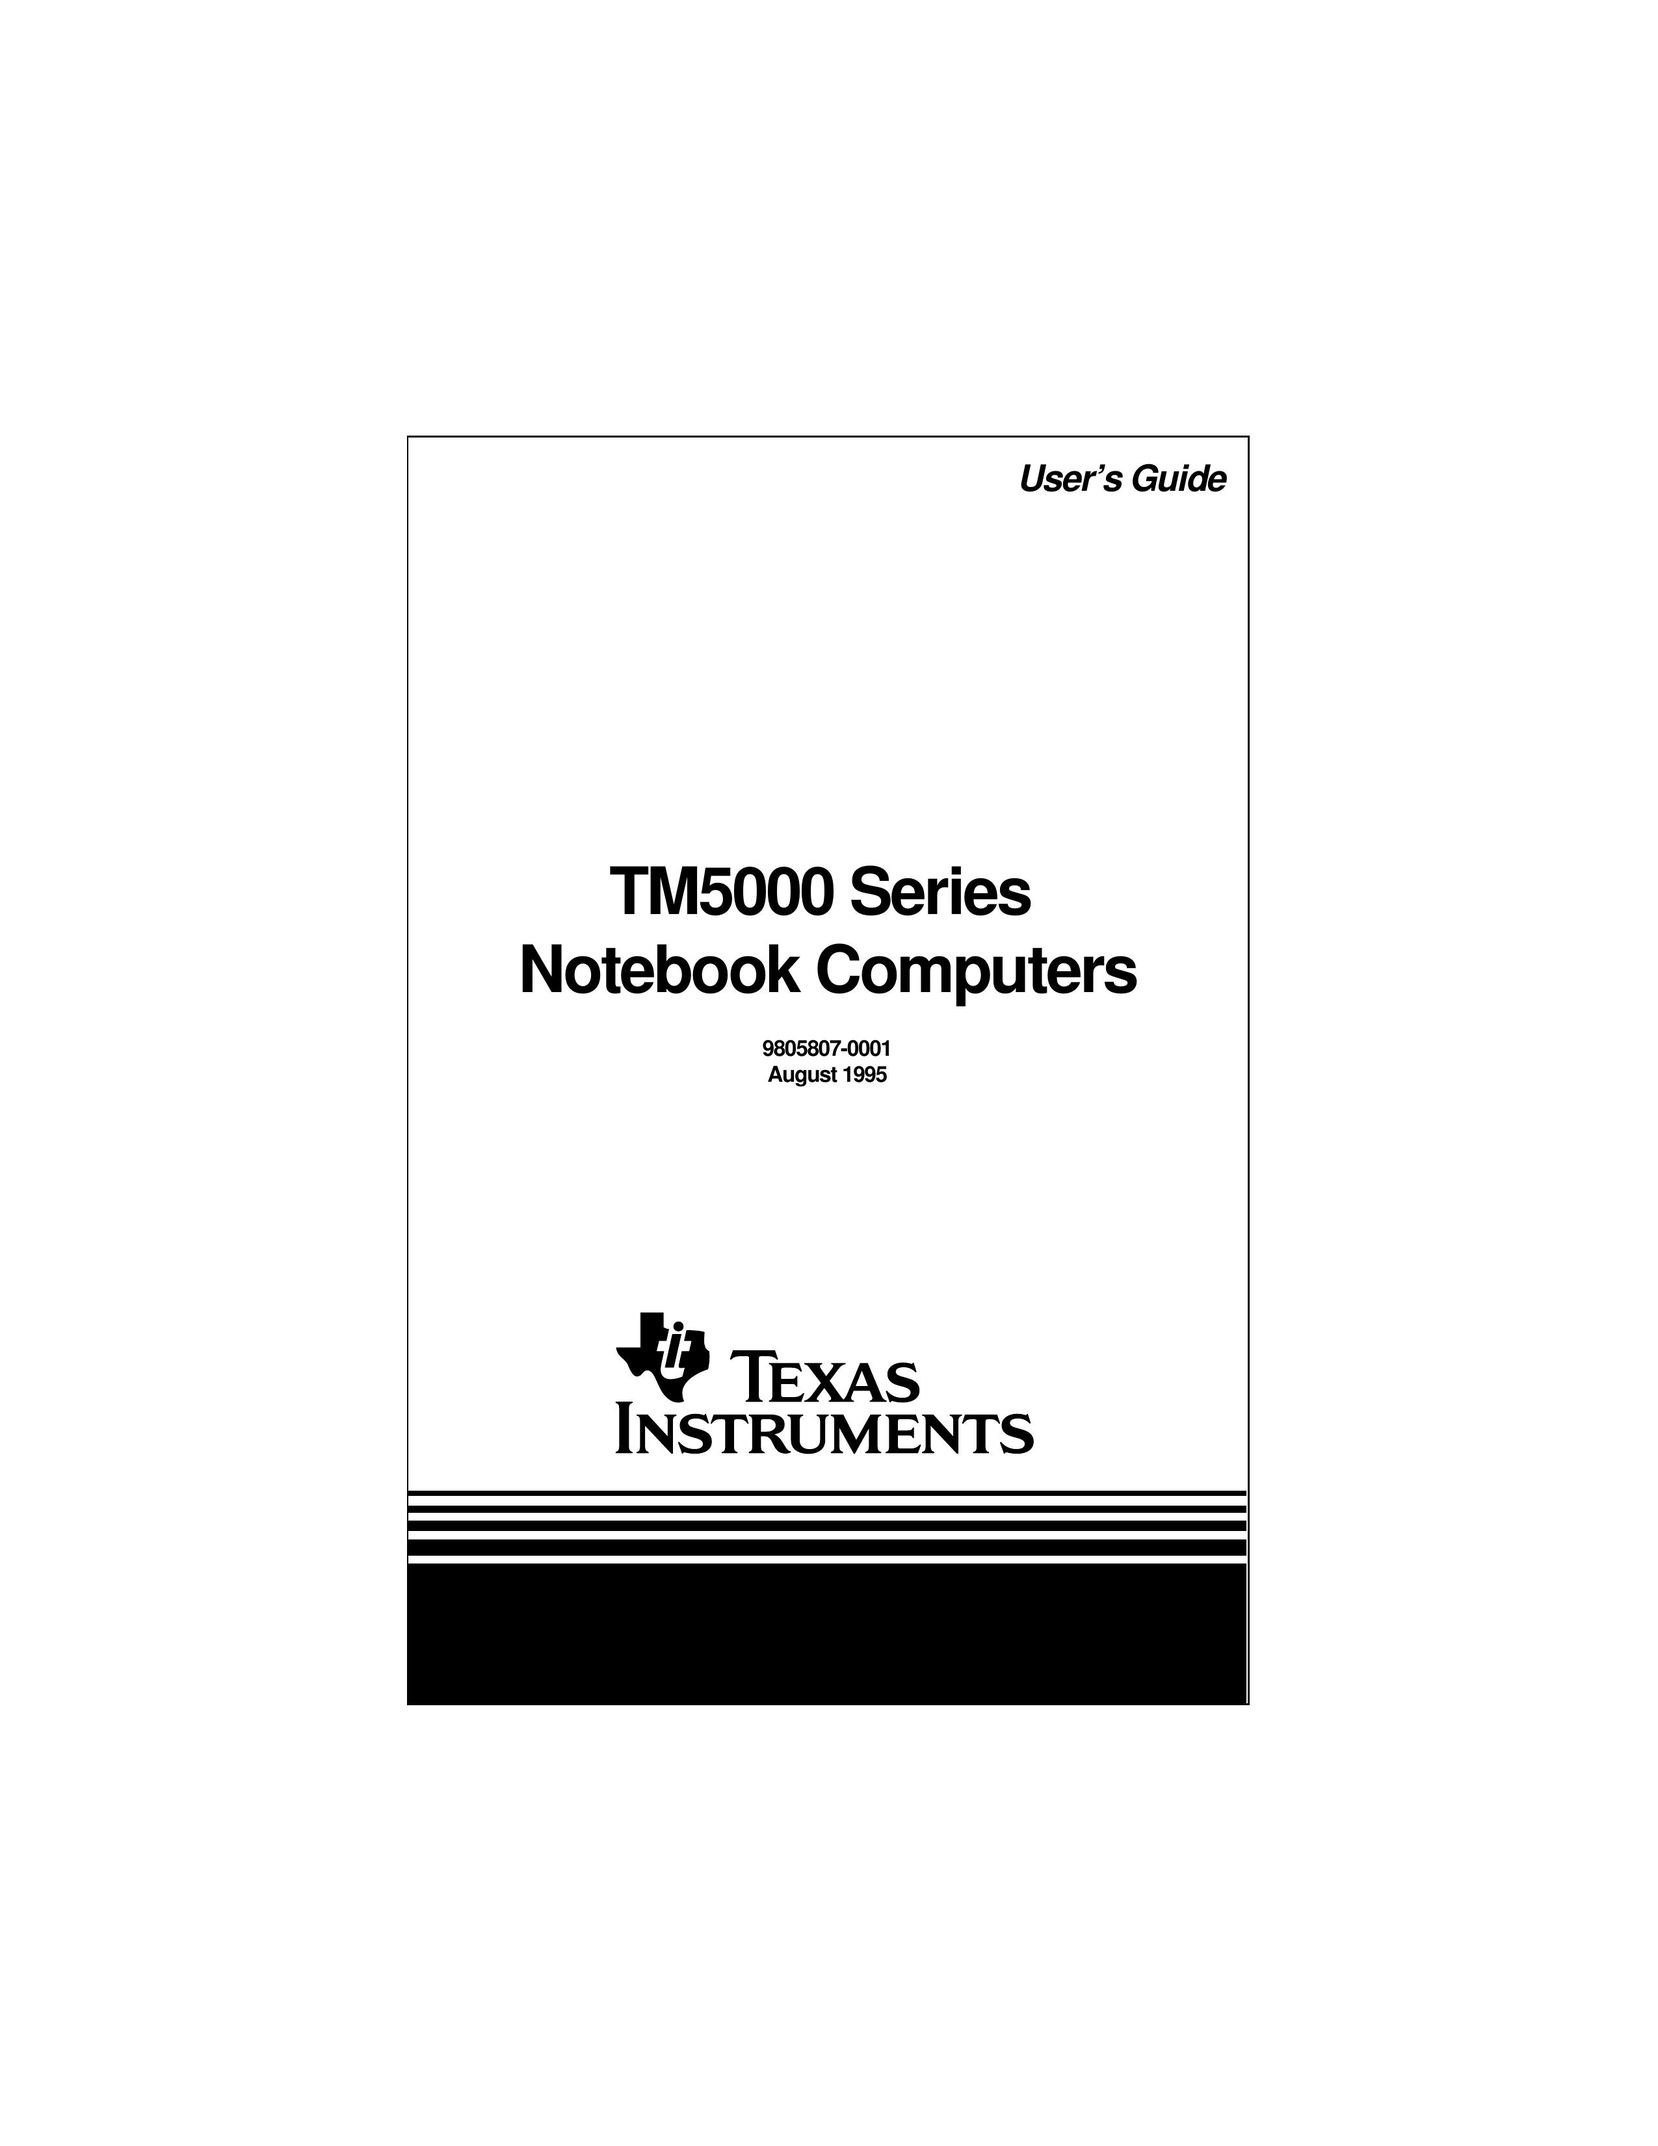 Texas Instruments TM5000 Series Laptop User Manual